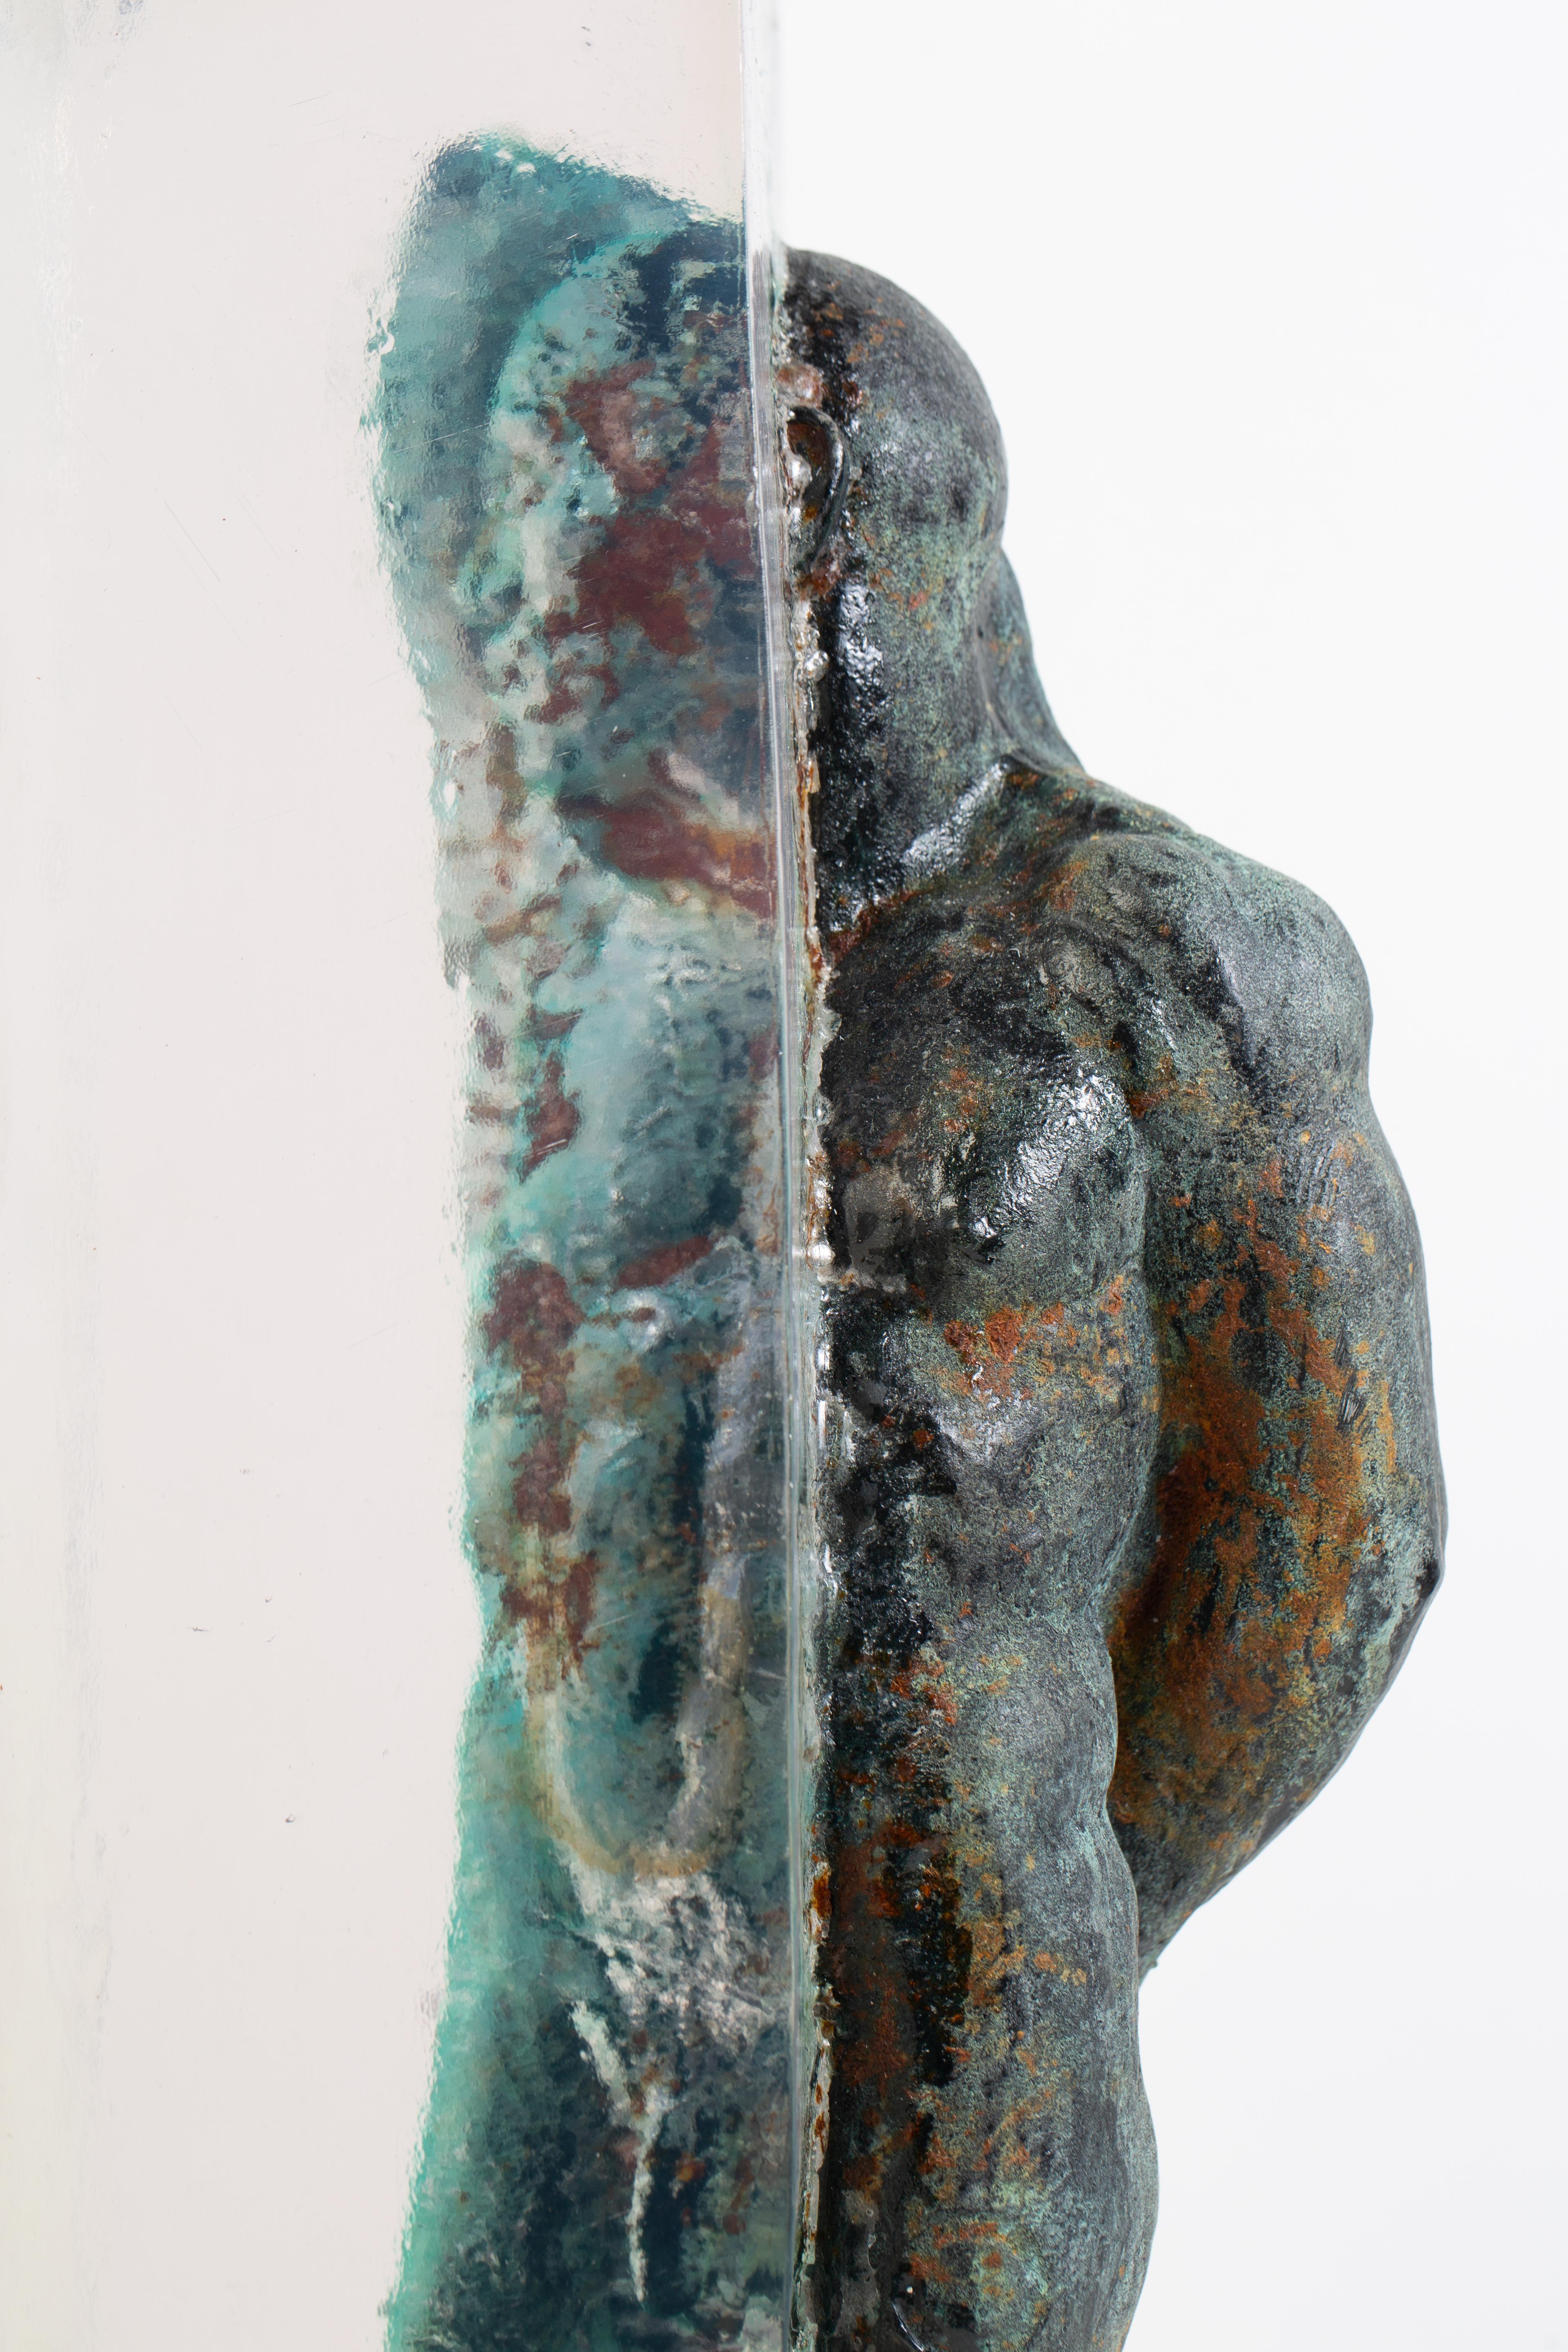 Embedded Slave - After Michelangelo, Sculpture Half Embedded in Clear Resin 13